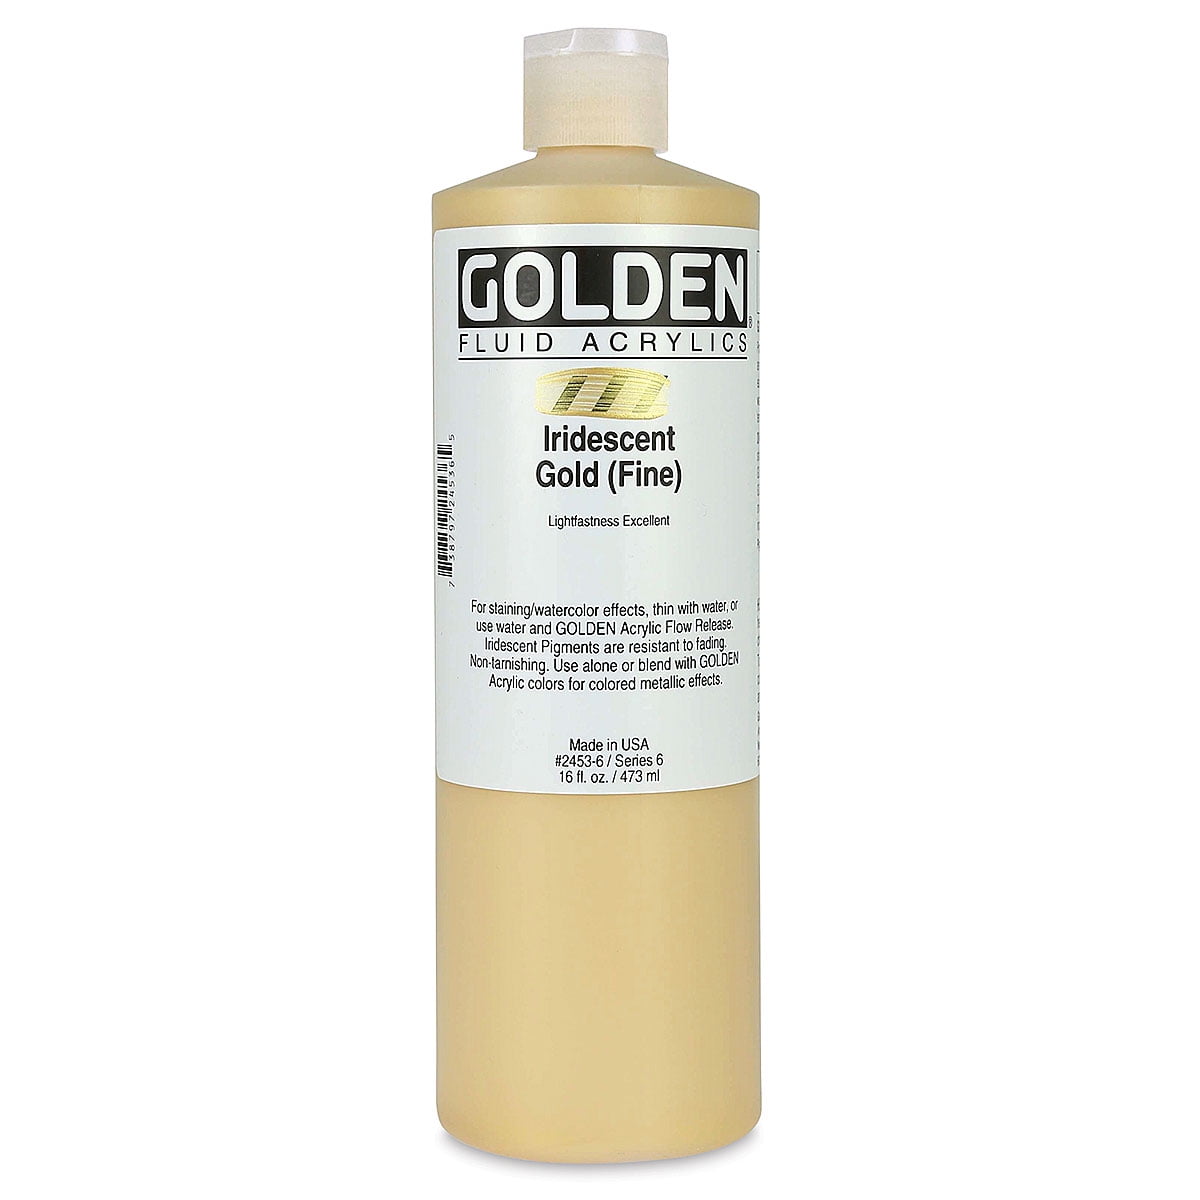 Lumintrail Golden Fluid Acrylic Paint, Titan Buff, 16 fl. oz. Bottles, Color Acrylic Paints Sticky Notes